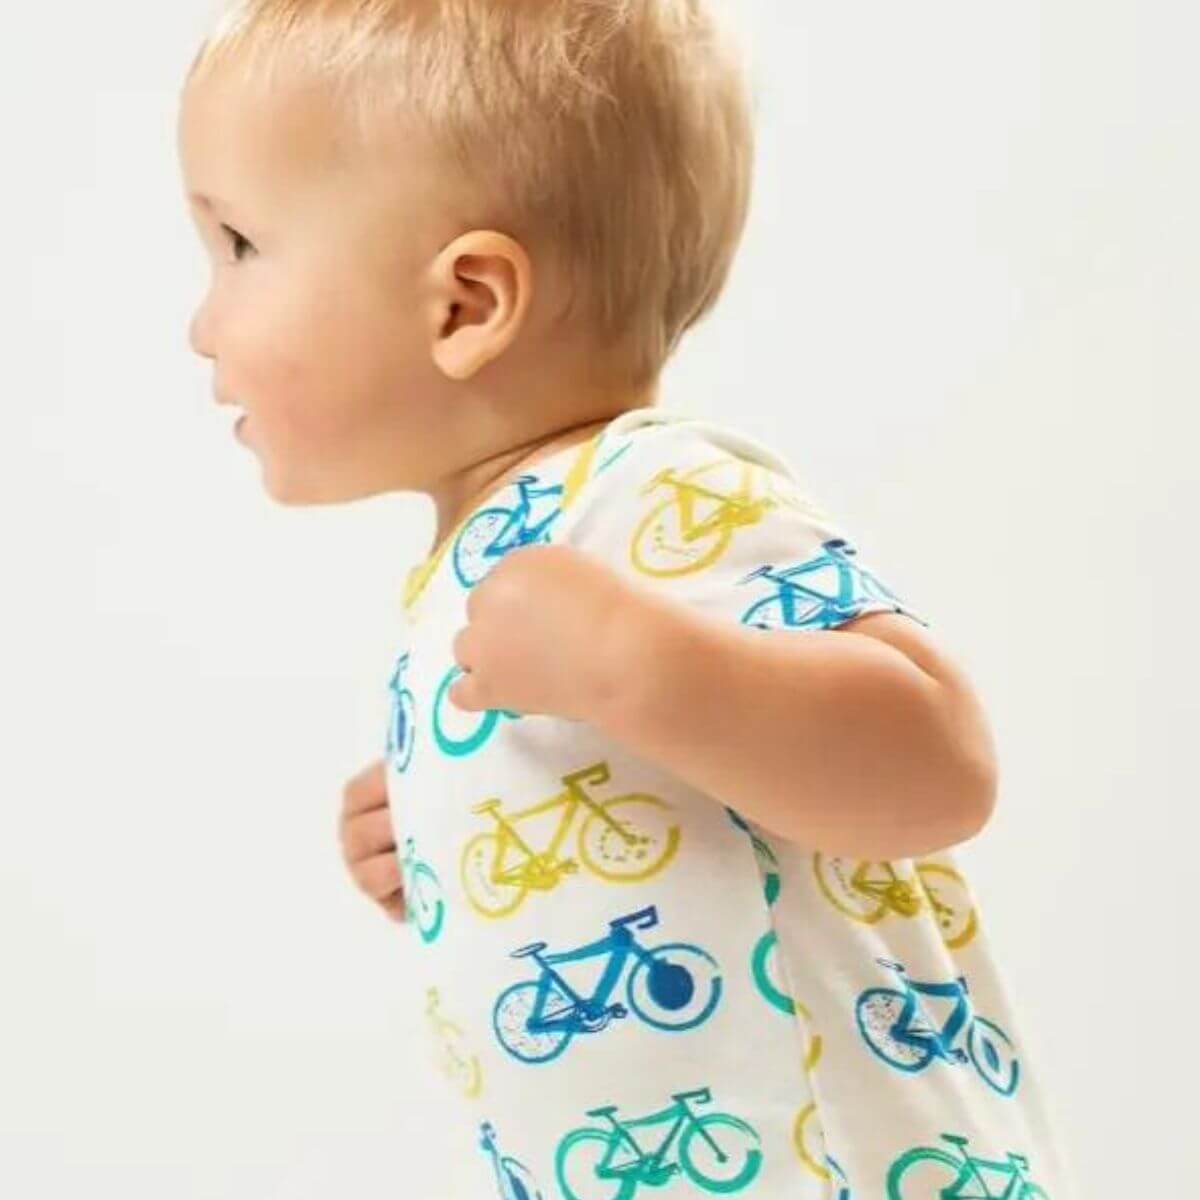 Organic Baby Bodysuit - Bicycles